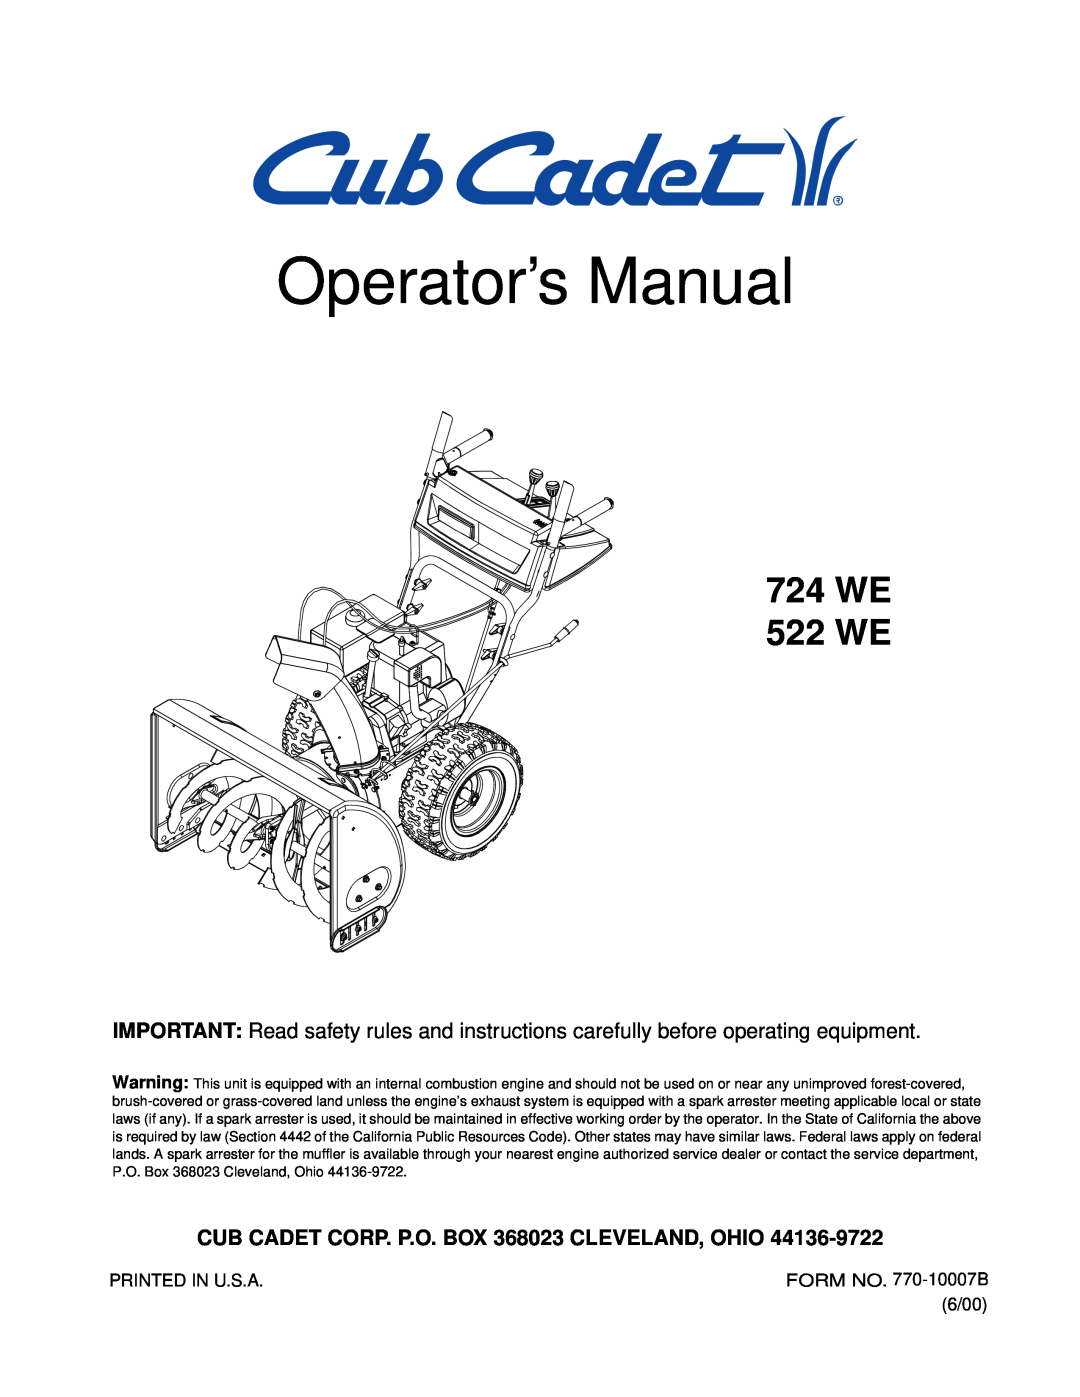 Cub Cadet manual CUB CADET CORP. P.O. BOX 368023 CLEVELAND, OHIO, Operator’s Manual, 724 WE 522 WE 